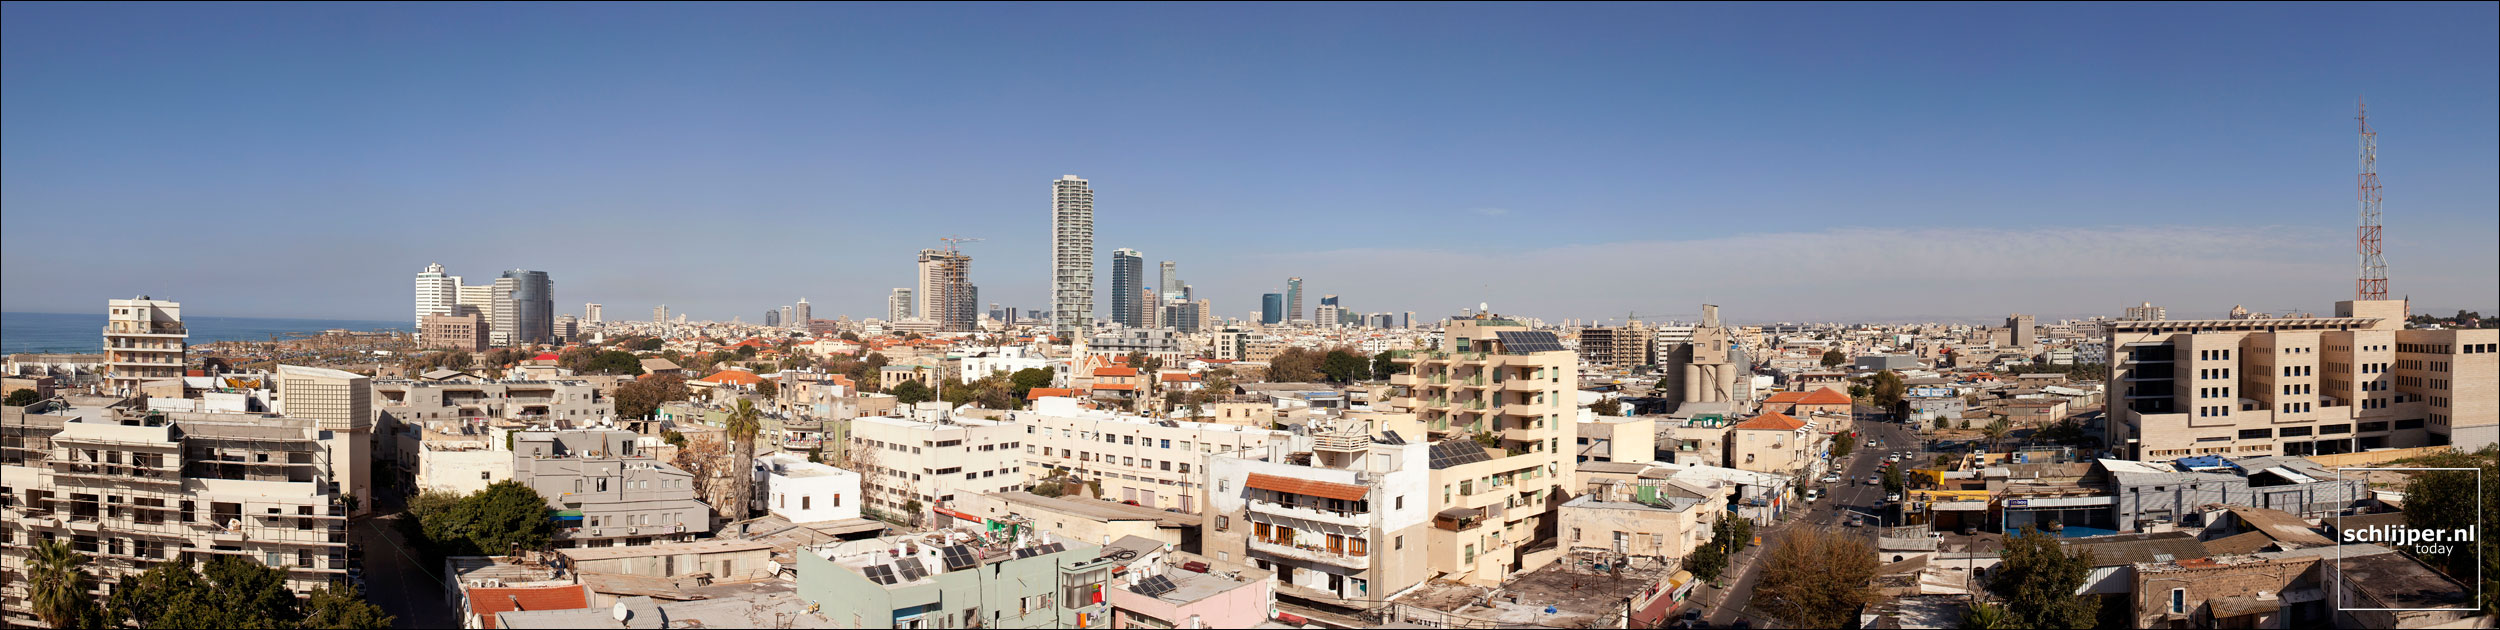 Israel, Tel Aviv, 14 februari 2009